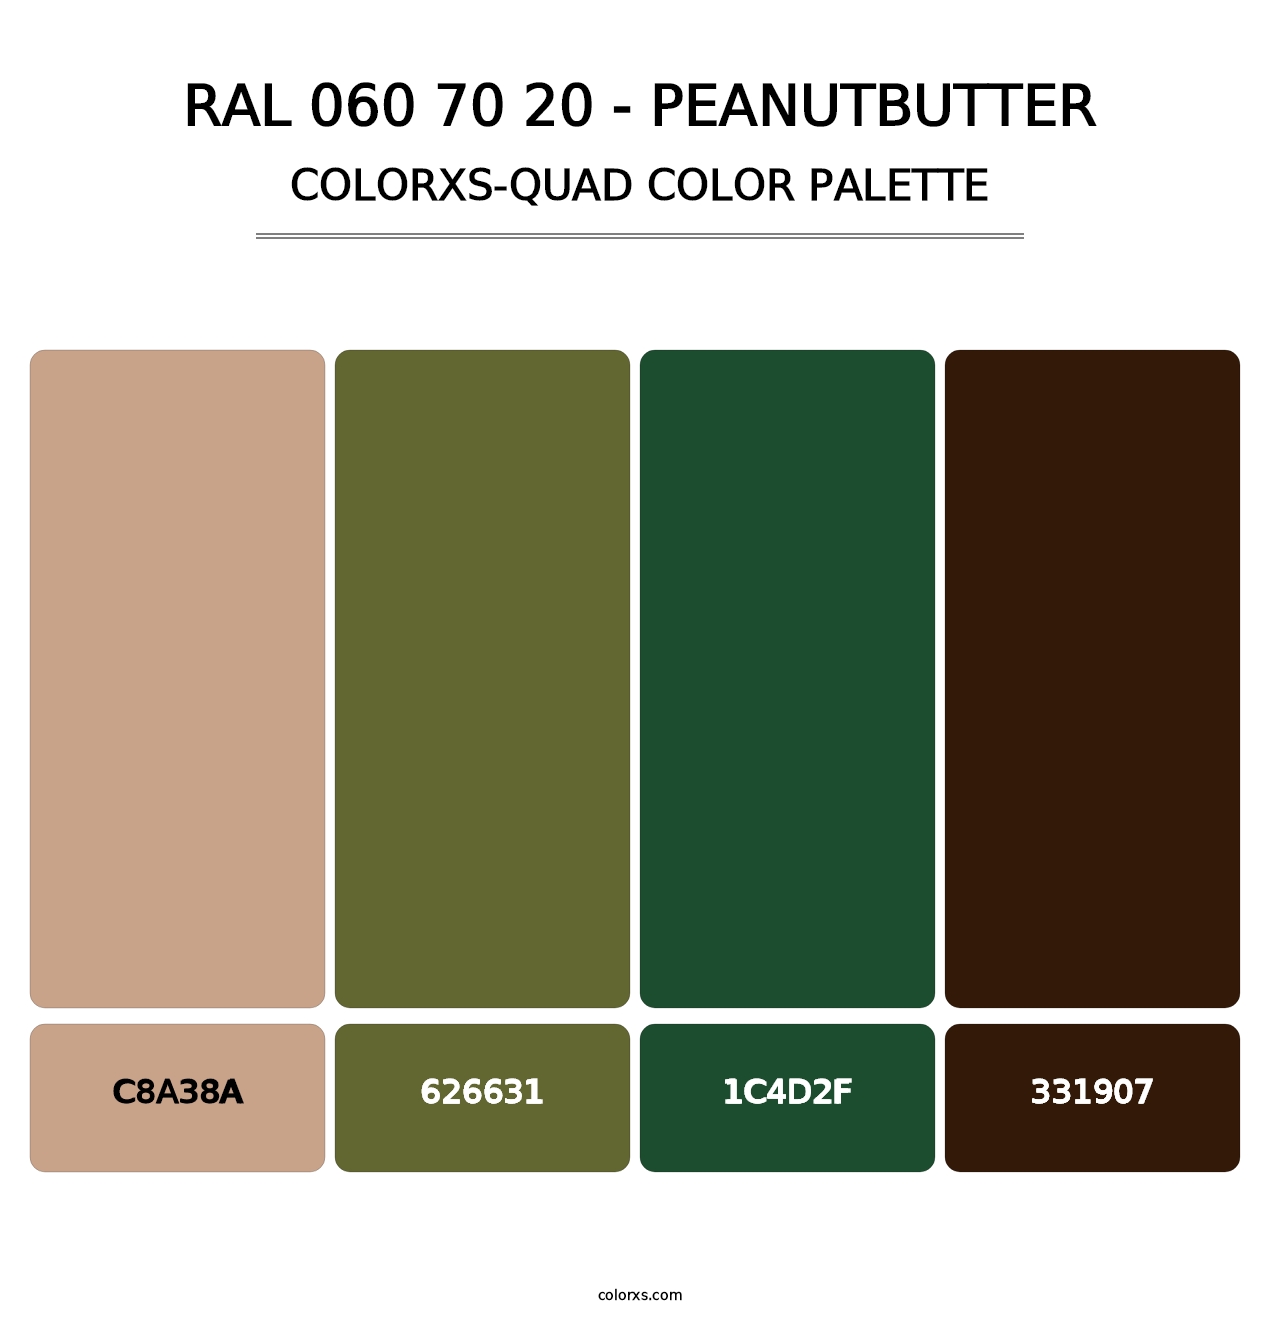 RAL 060 70 20 - Peanutbutter - Colorxs Quad Palette